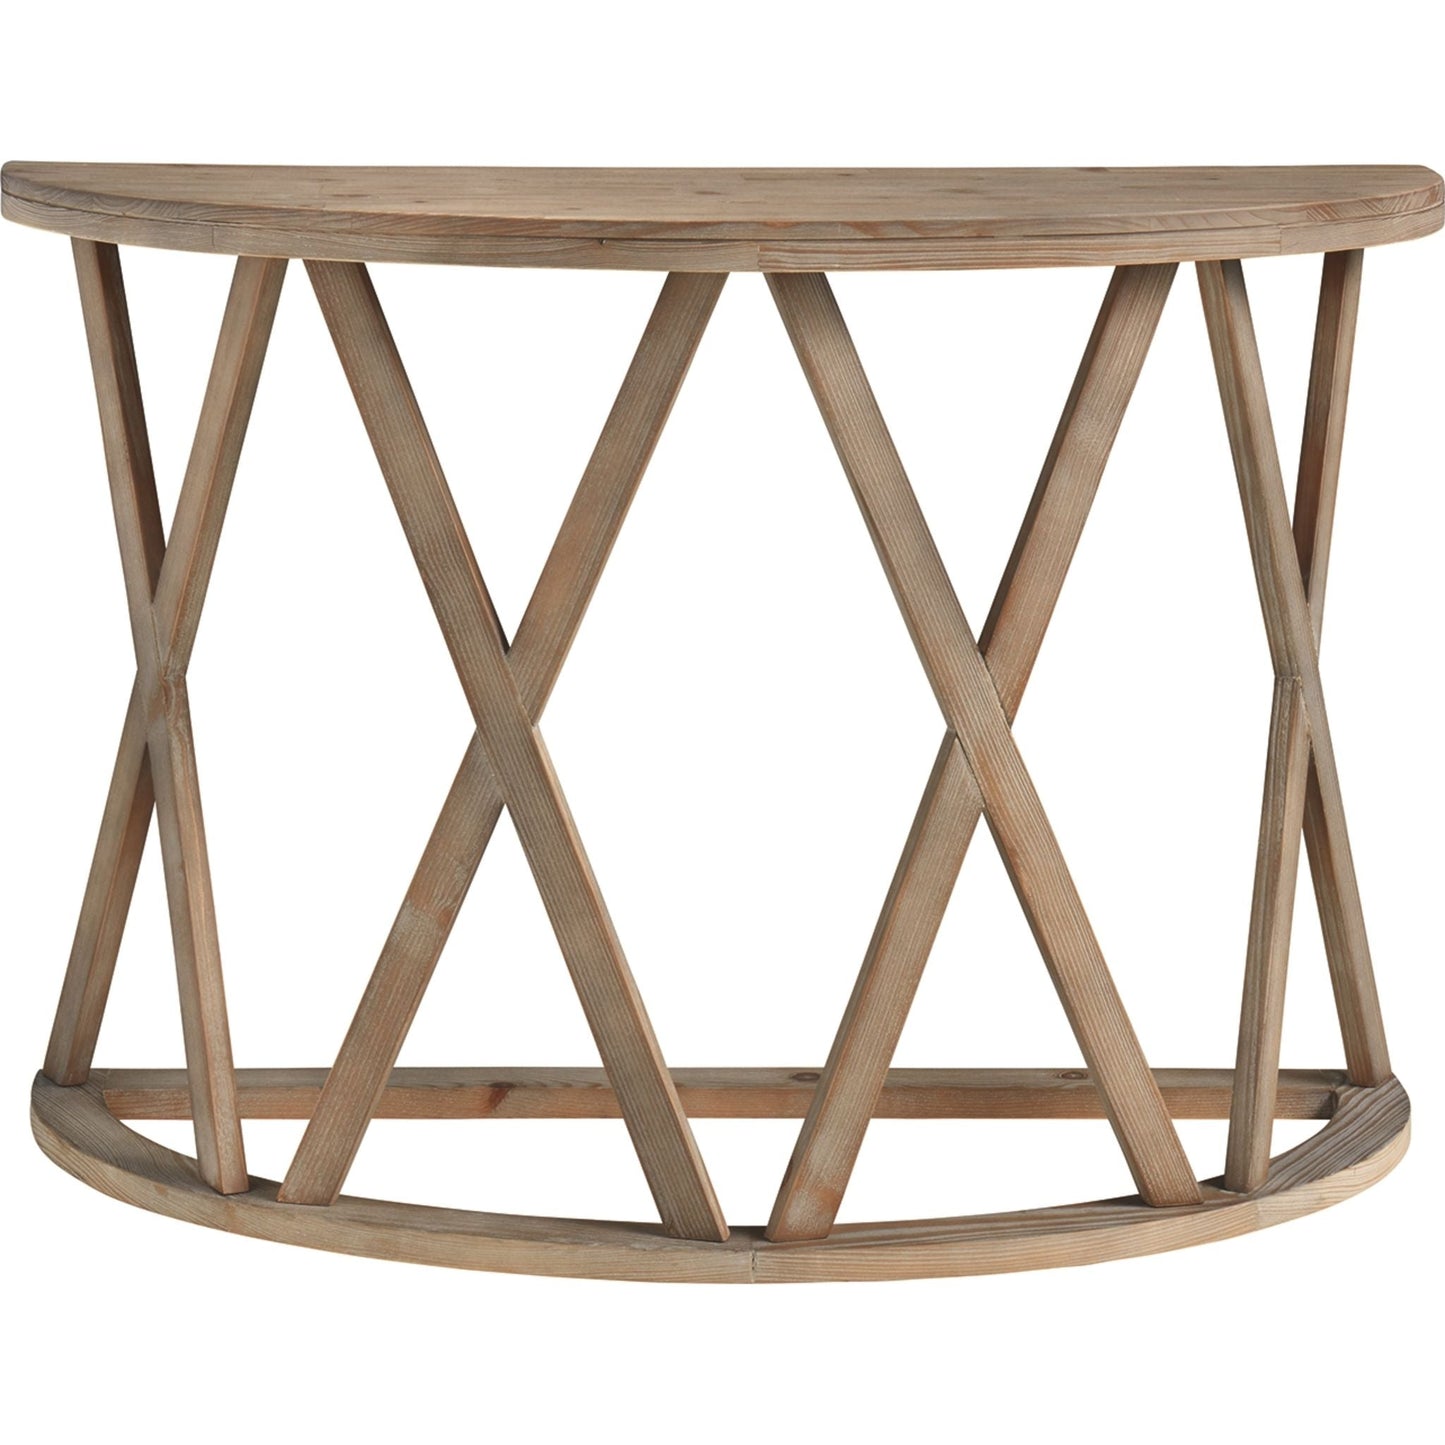 Glasslore Sofa Table - Wood